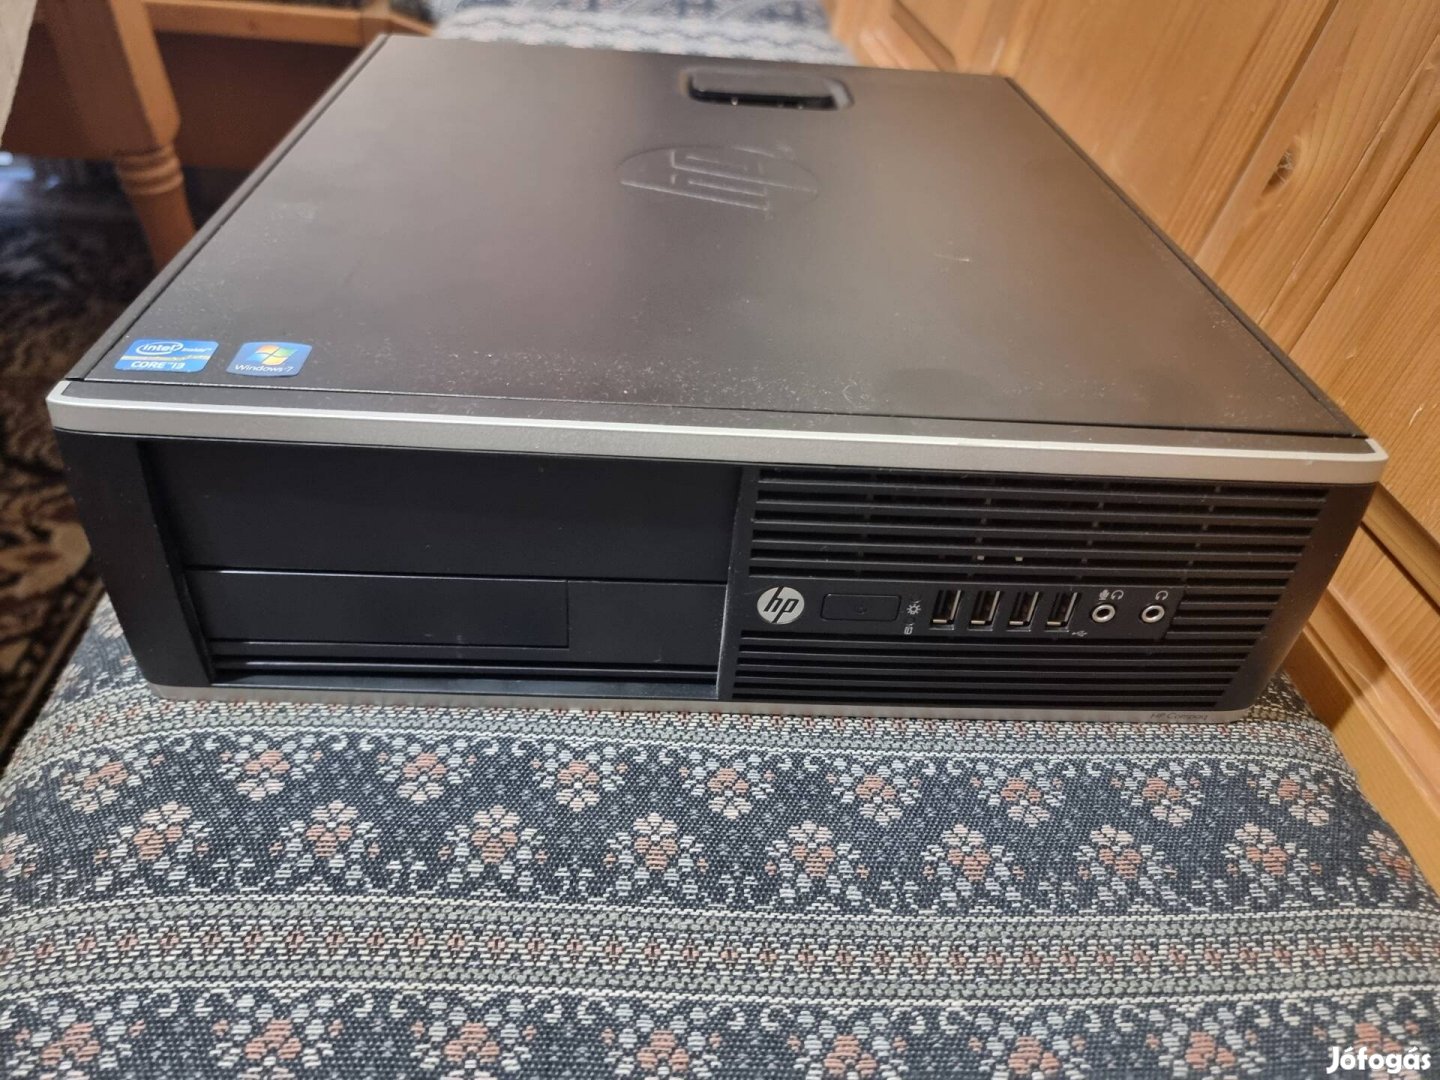 Eladó HP Compaq 8200 Elite Sff PC, Ajándék Monitorral!